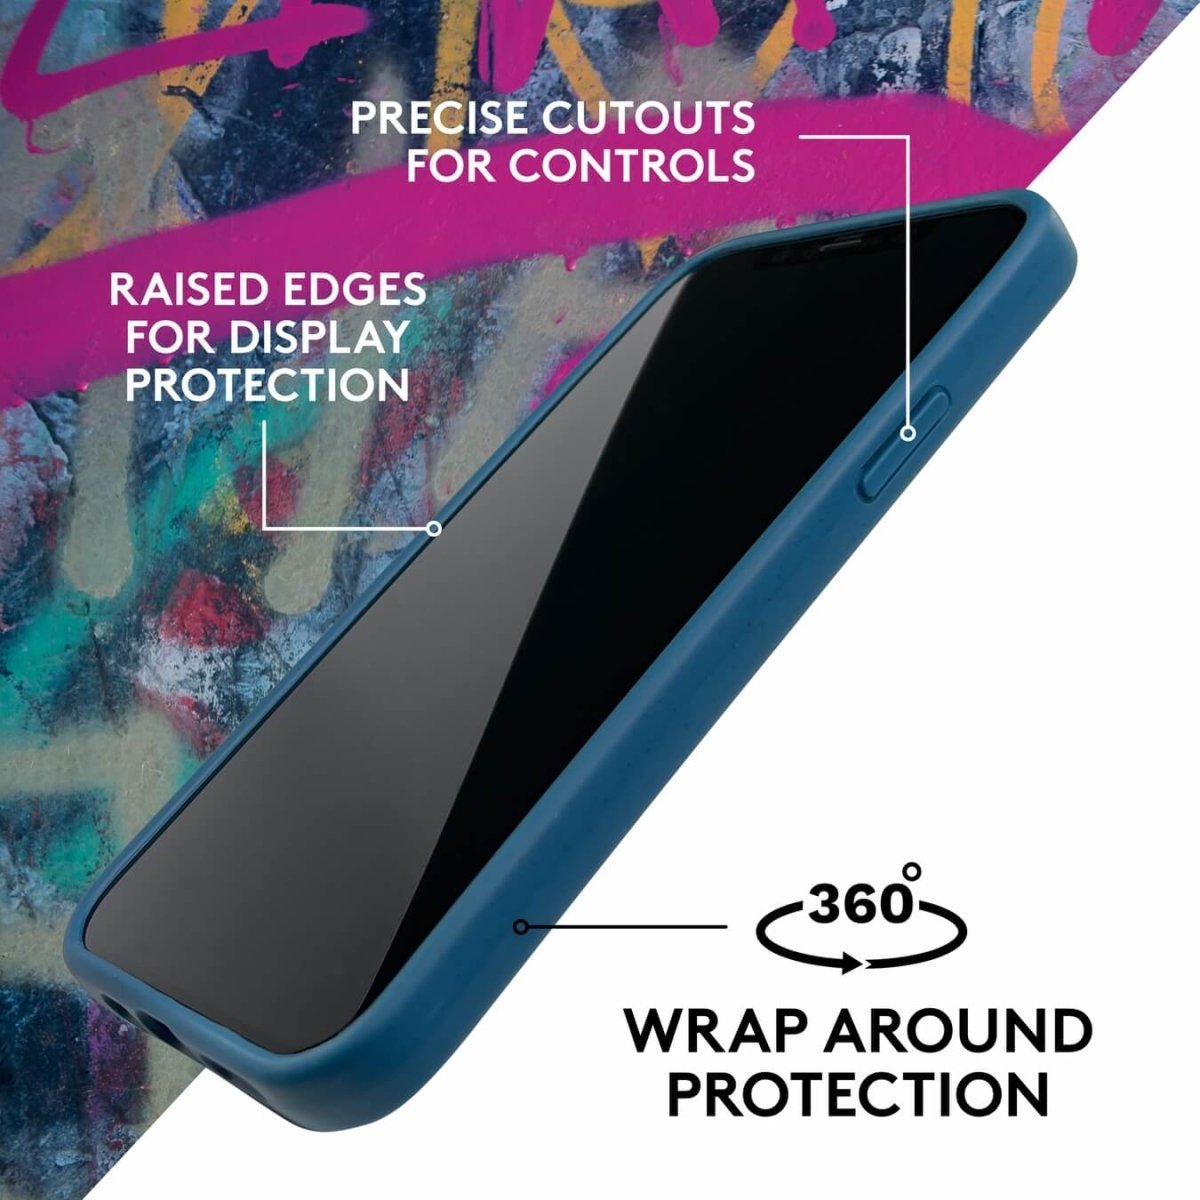 Biodegradable iPhone 14 Plus Case - Deep Blue - Loam & Lore